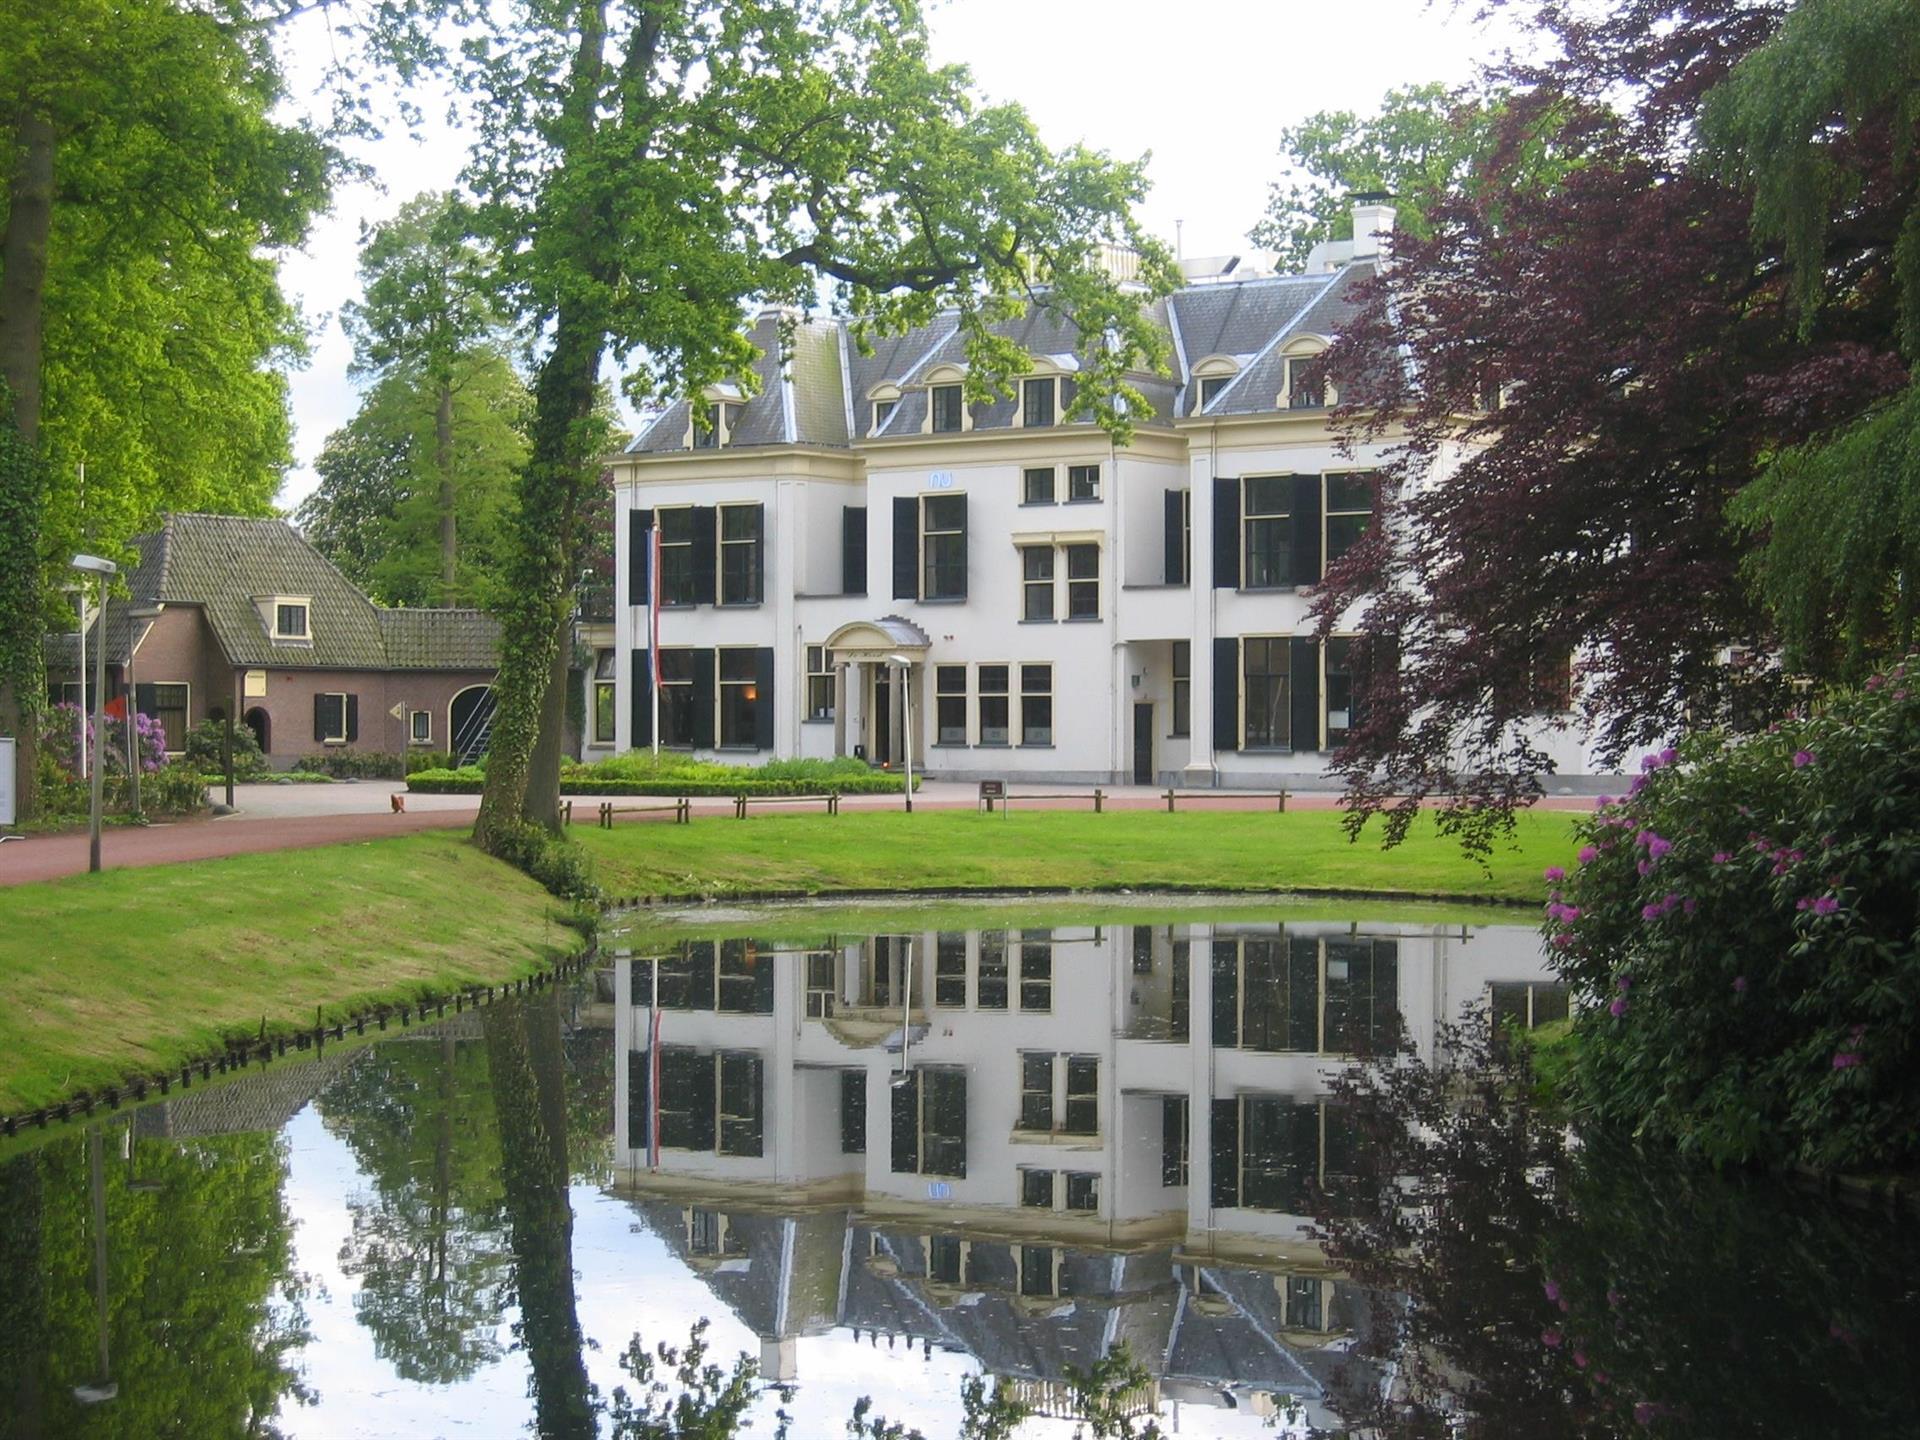 Landgoed de Horst in Driebergen-Rijsenburg, NL